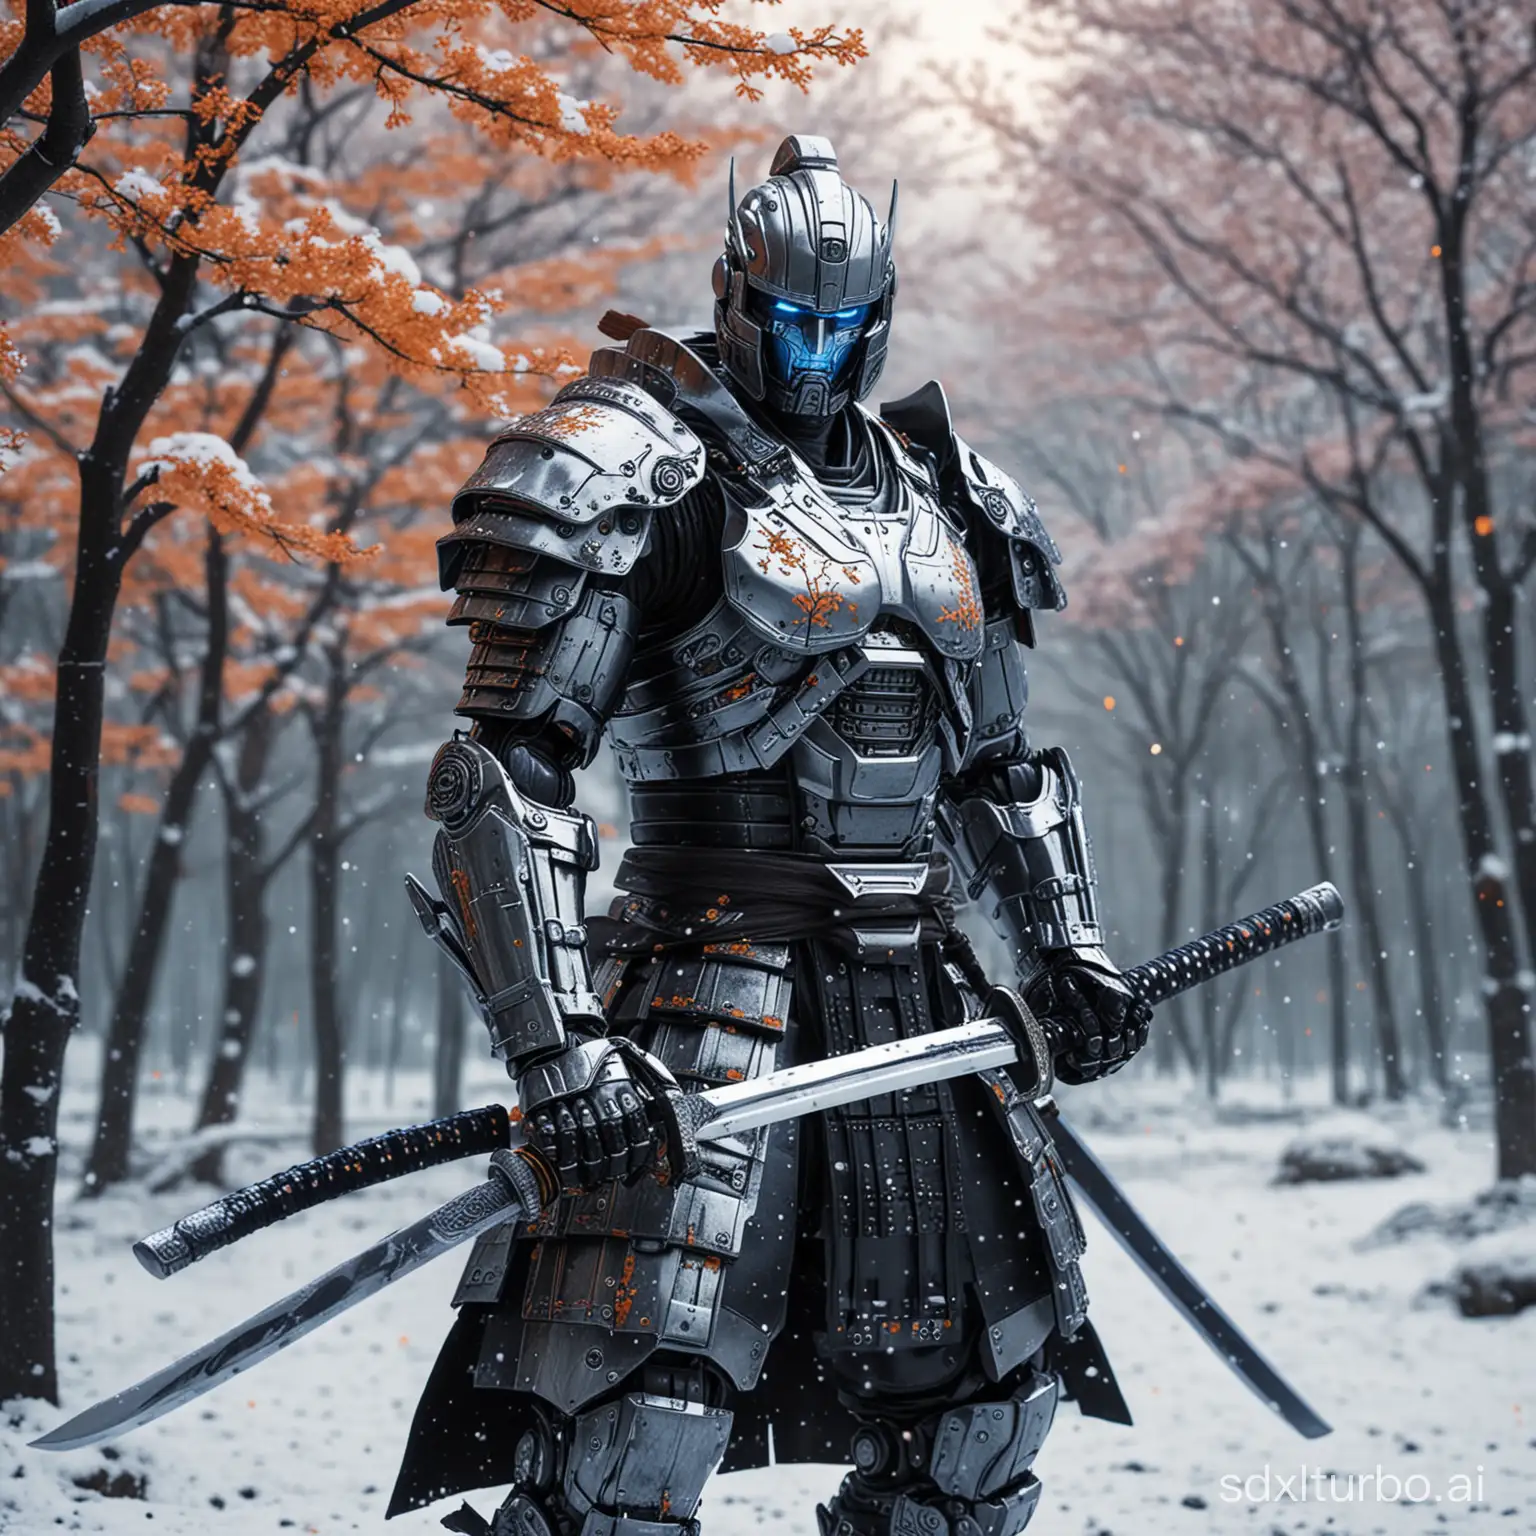 Silver-Chrome-Samurai-Robot-with-Glowing-Katana-in-Snowy-Blue-Sakura-Forest